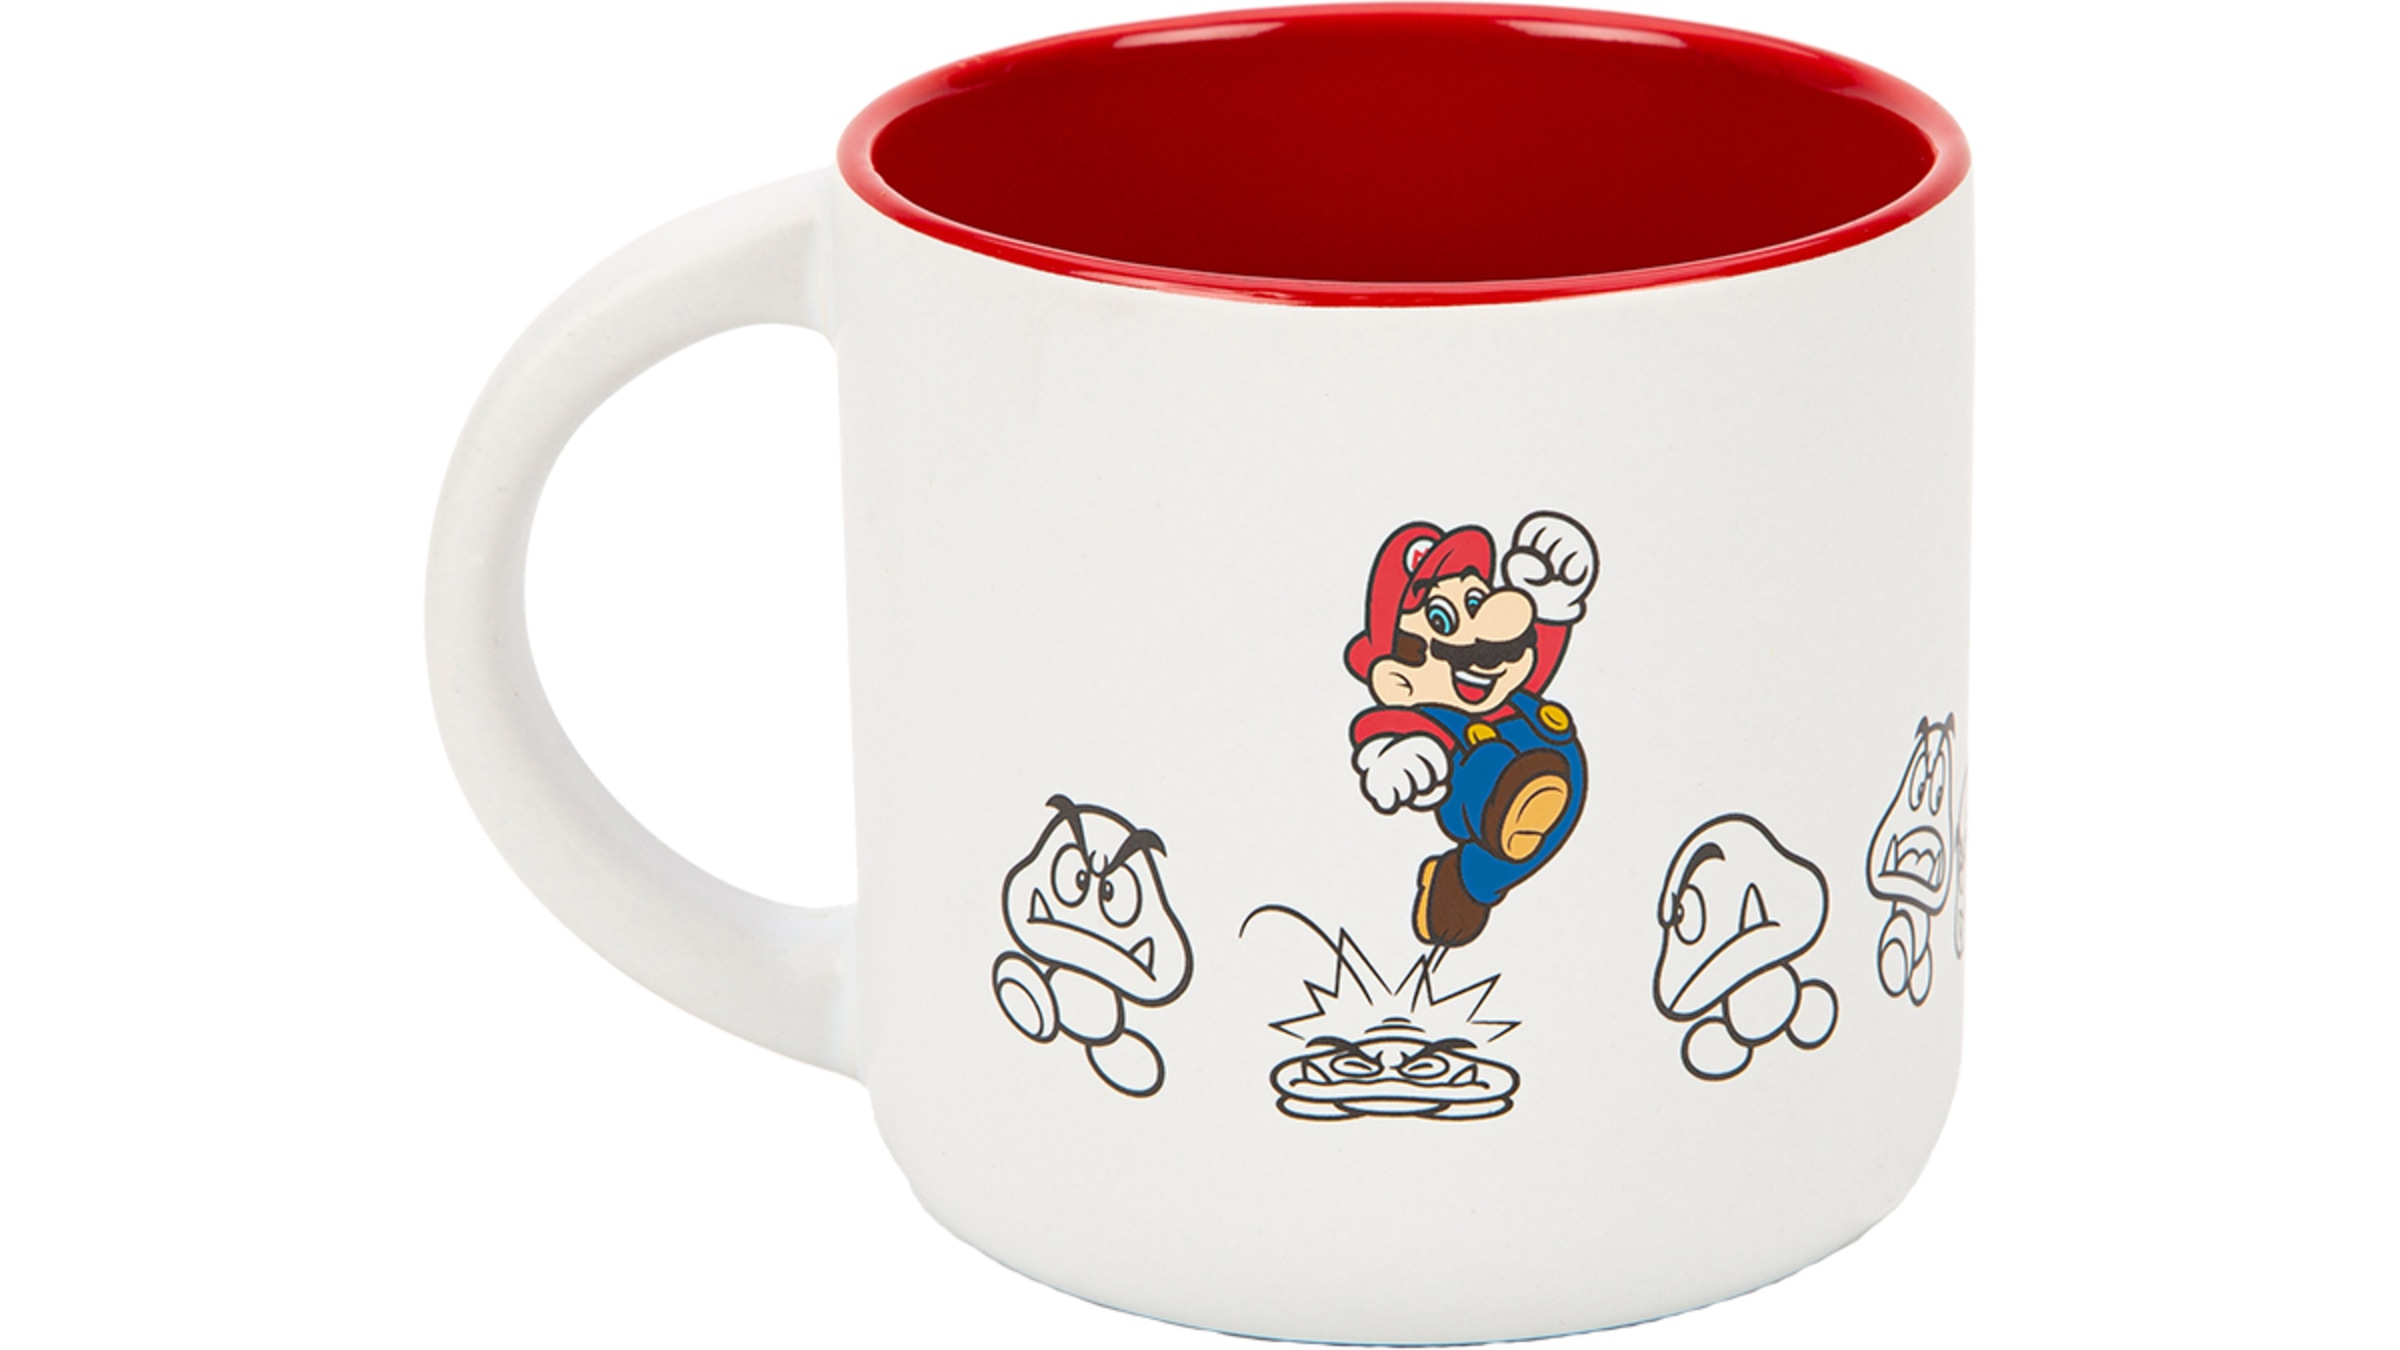 Super Mario - Its A Me Mario Tazza (Mug), 14.90 CHF